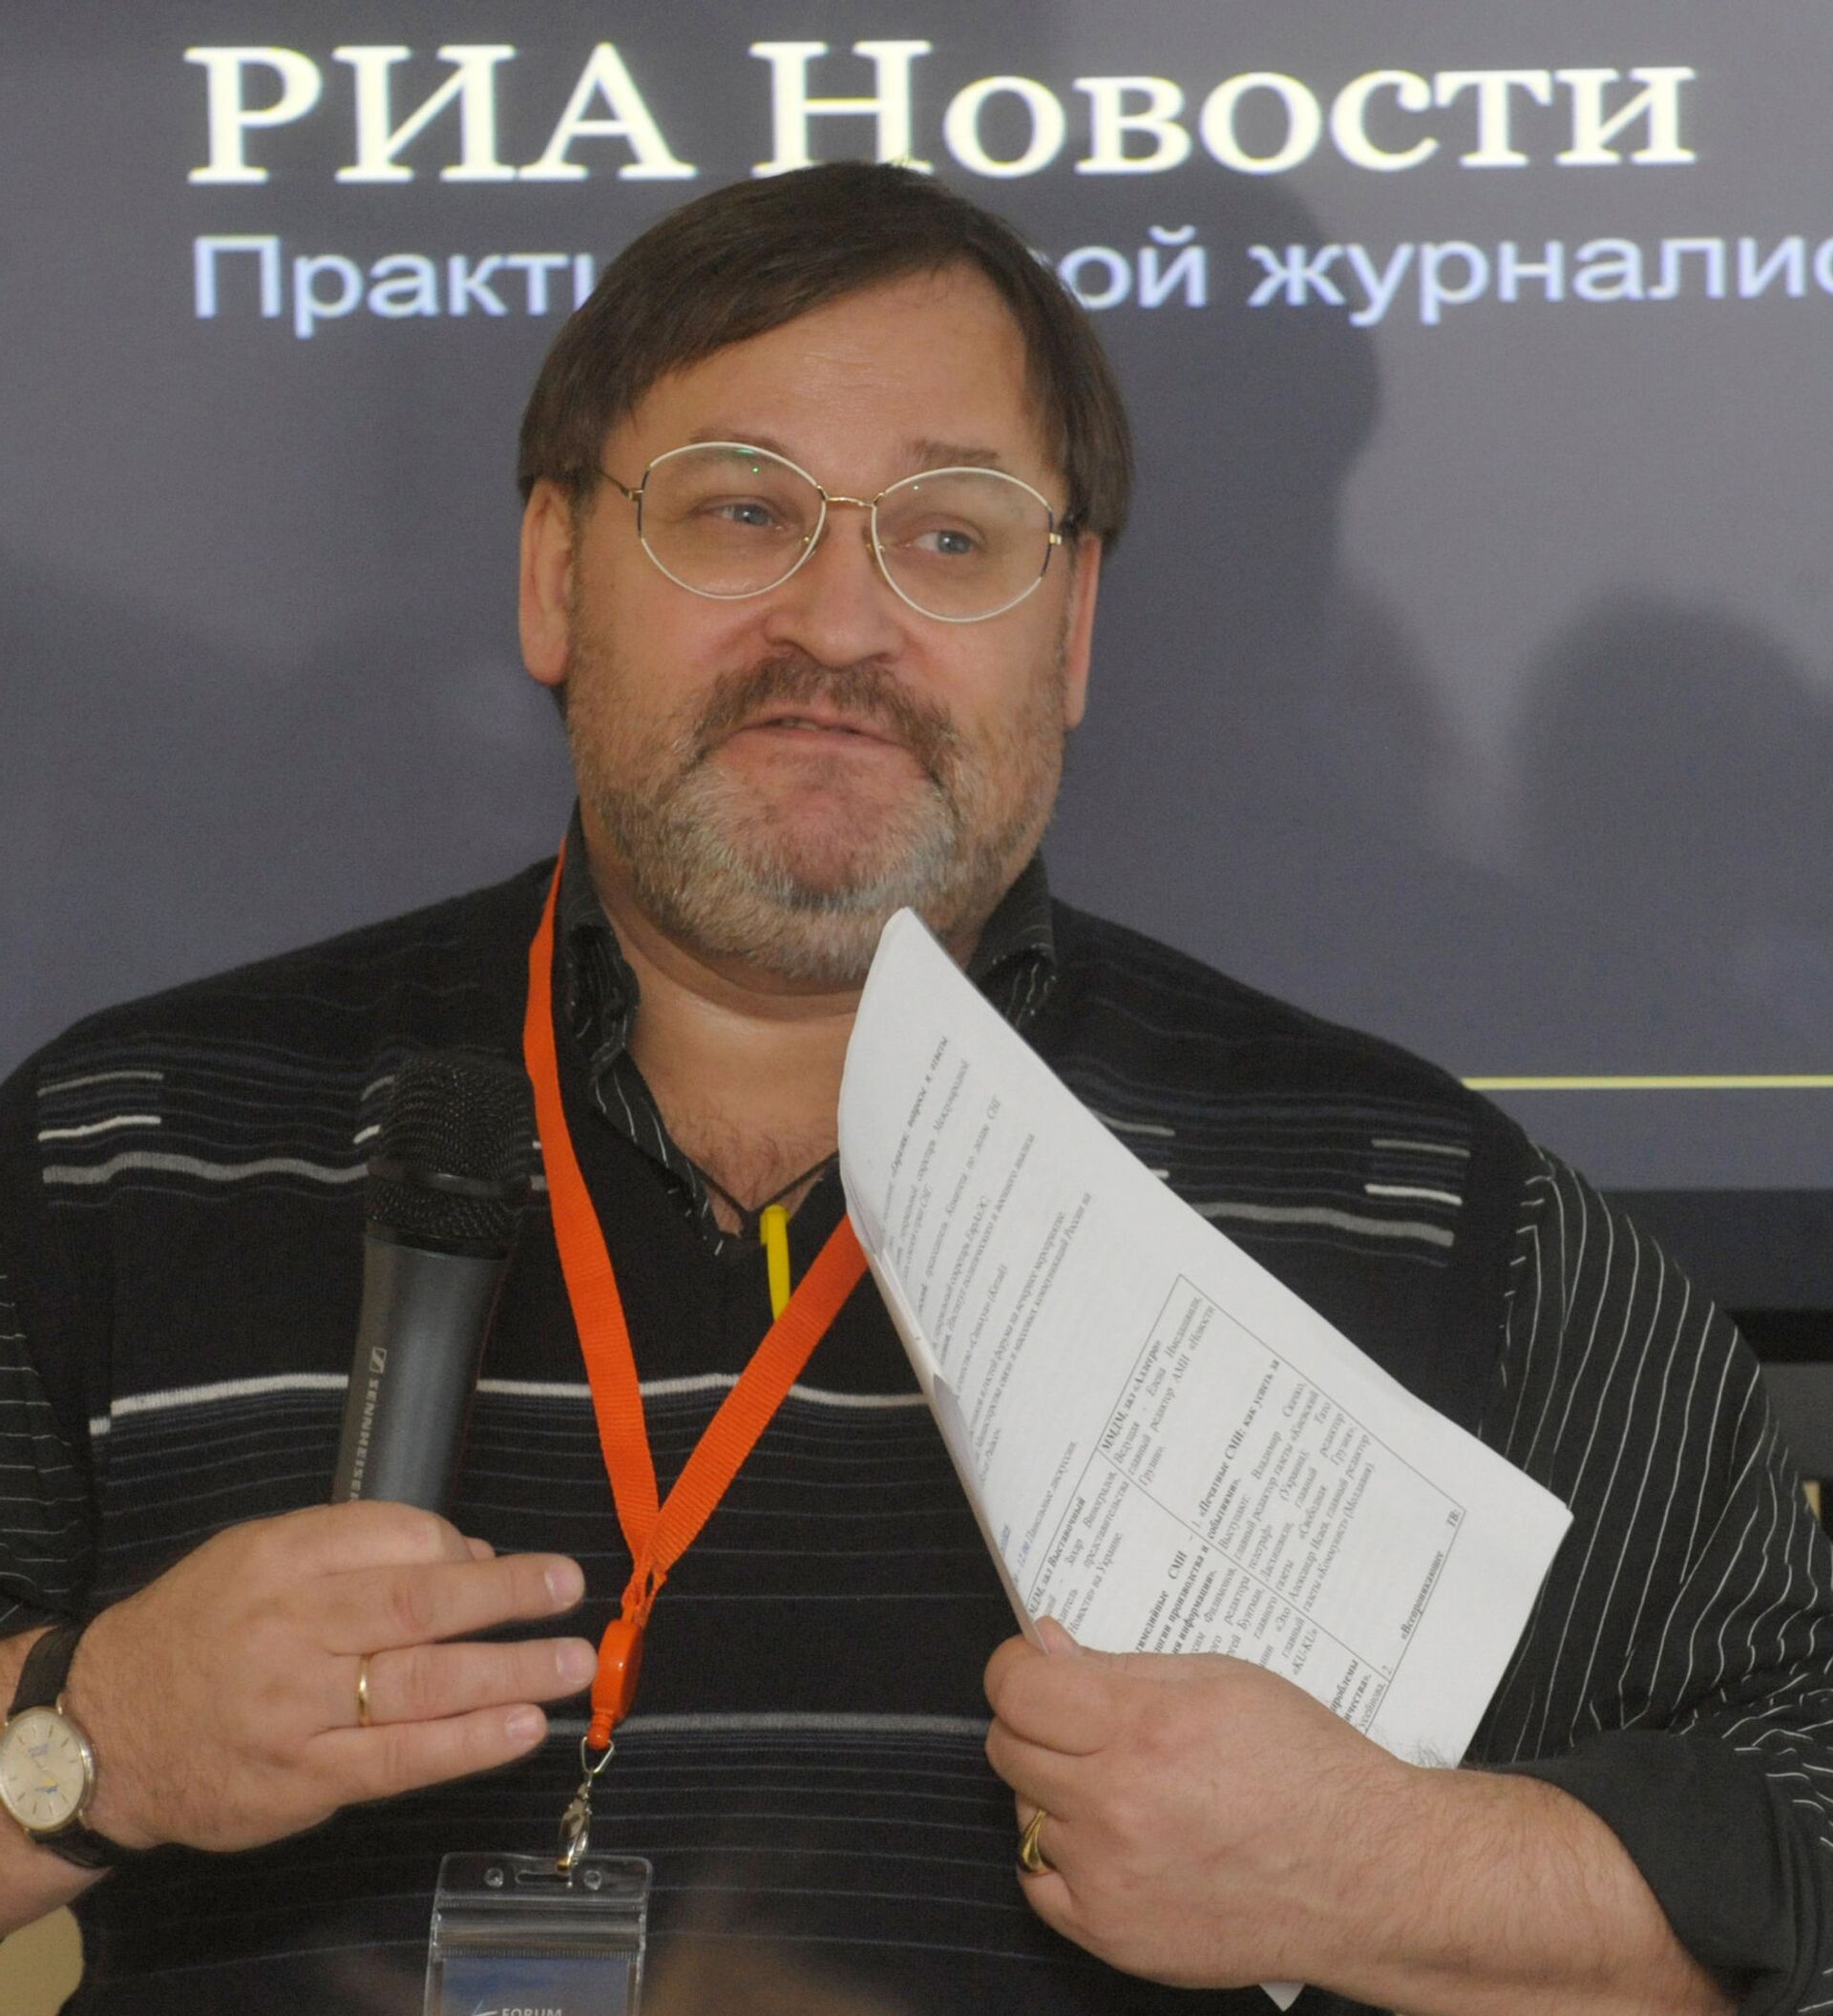 Укр журналист. Скачко журналист Украина.